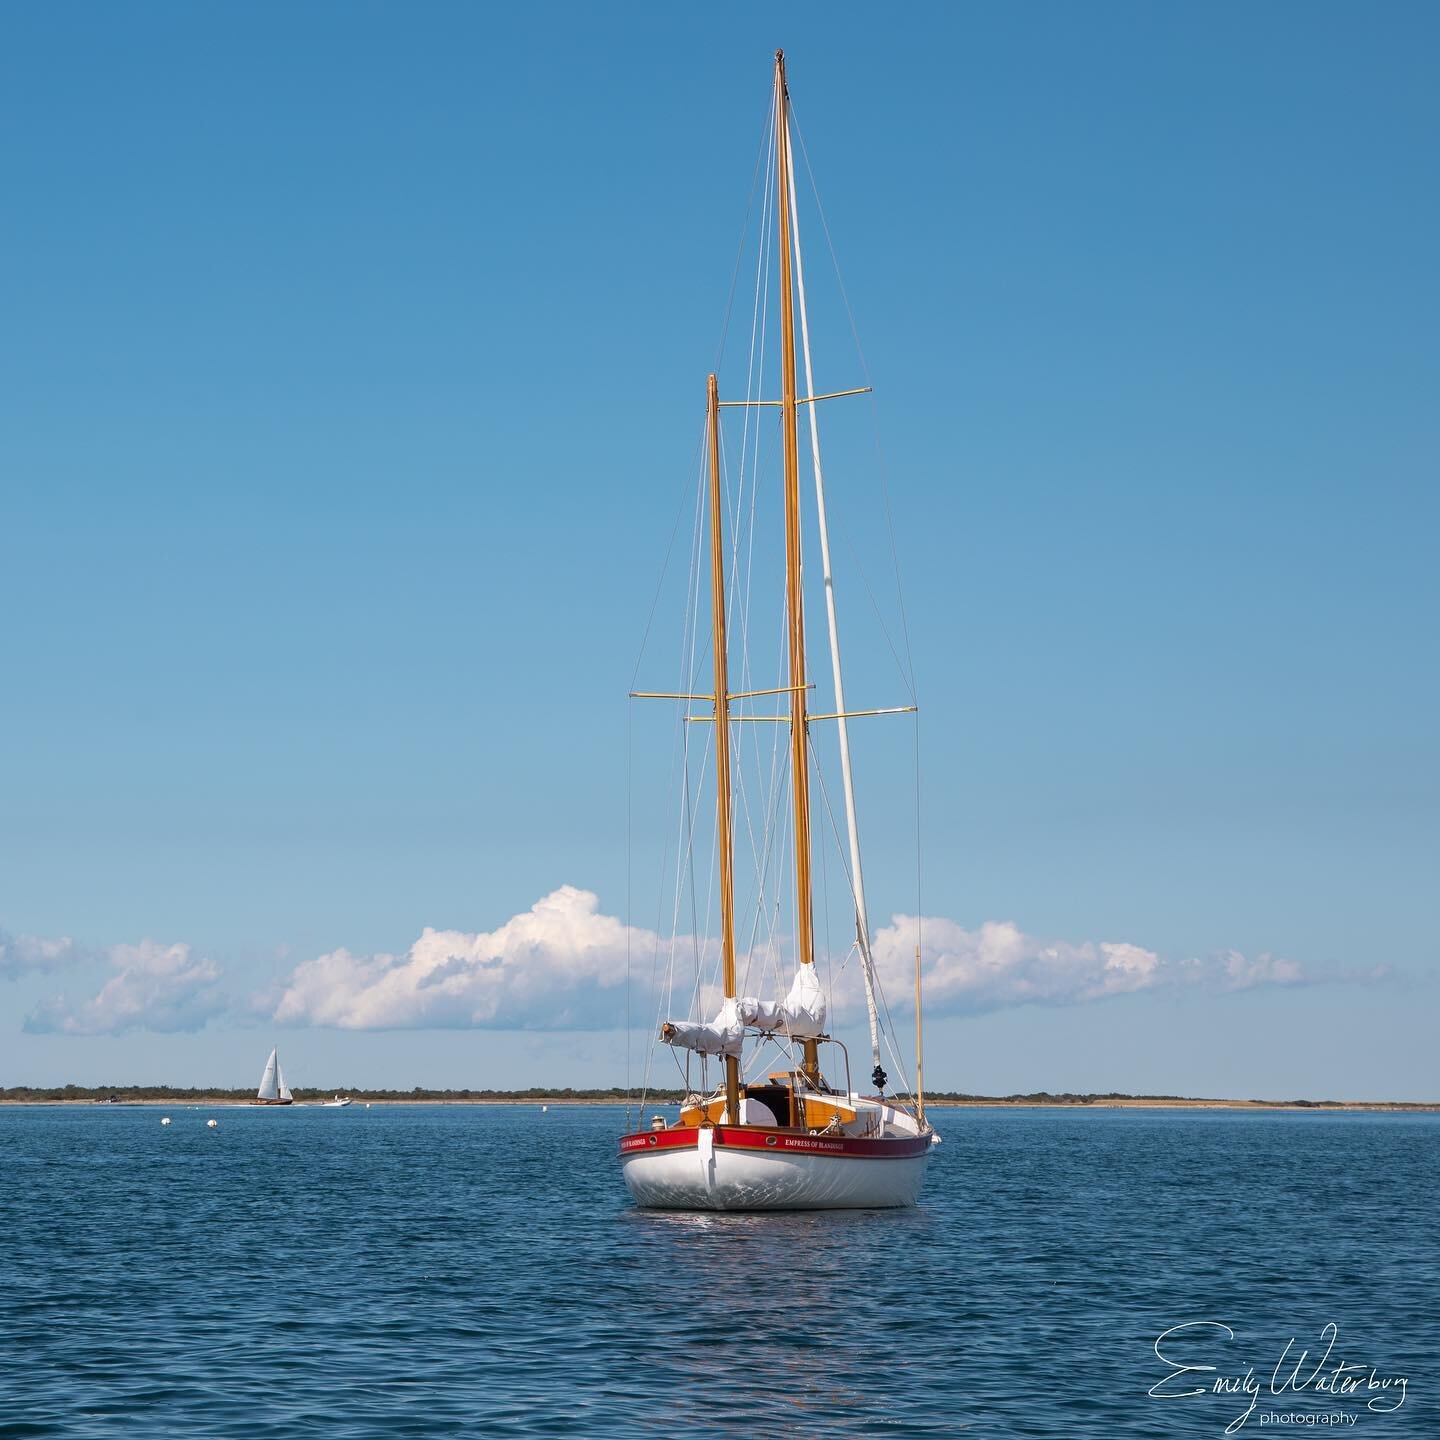 Taken last month on our final boating day of the season #sailboat #sail #onthewater #emilywaterburyphotography #emilywaterburyphoto